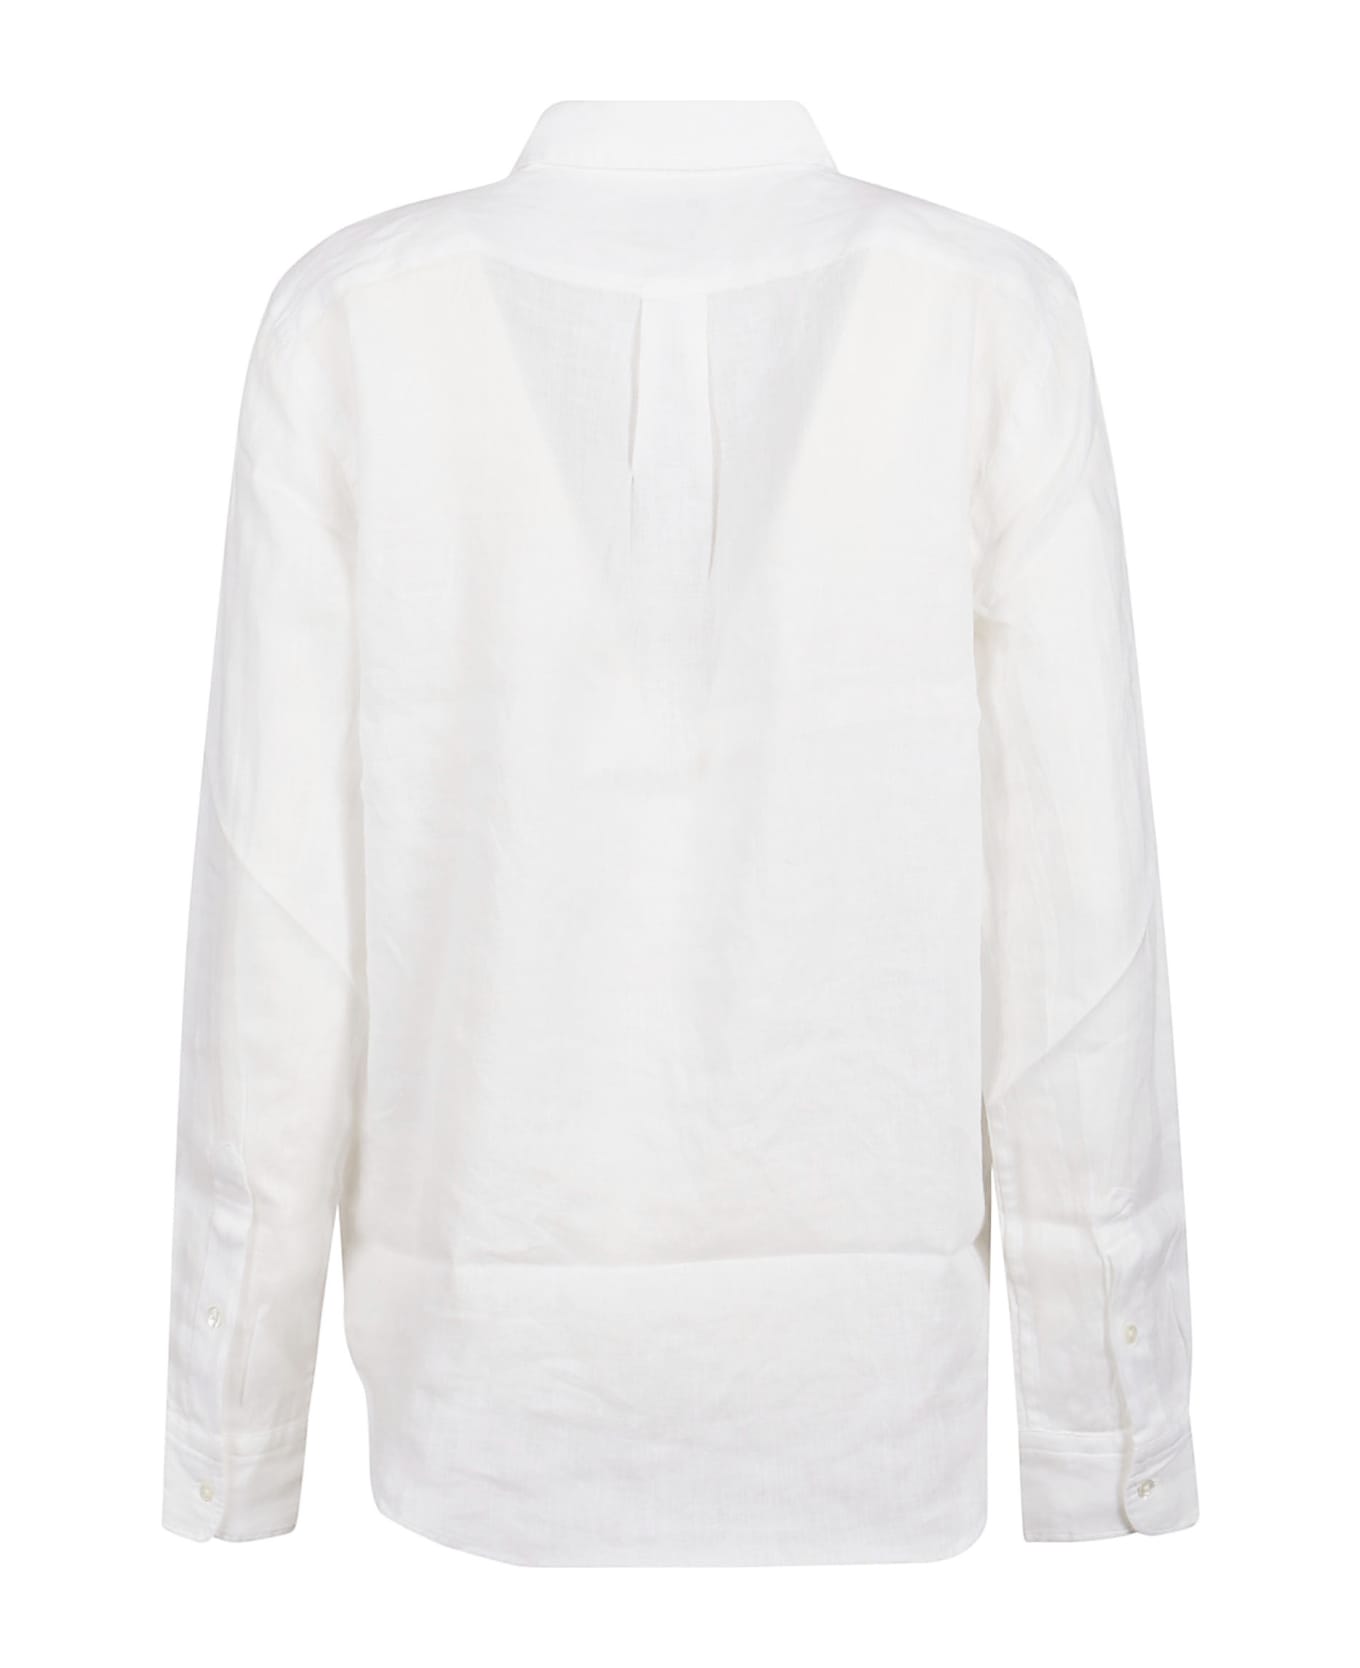 Polo Ralph Lauren Long Sleeve Button Front Shirt - White